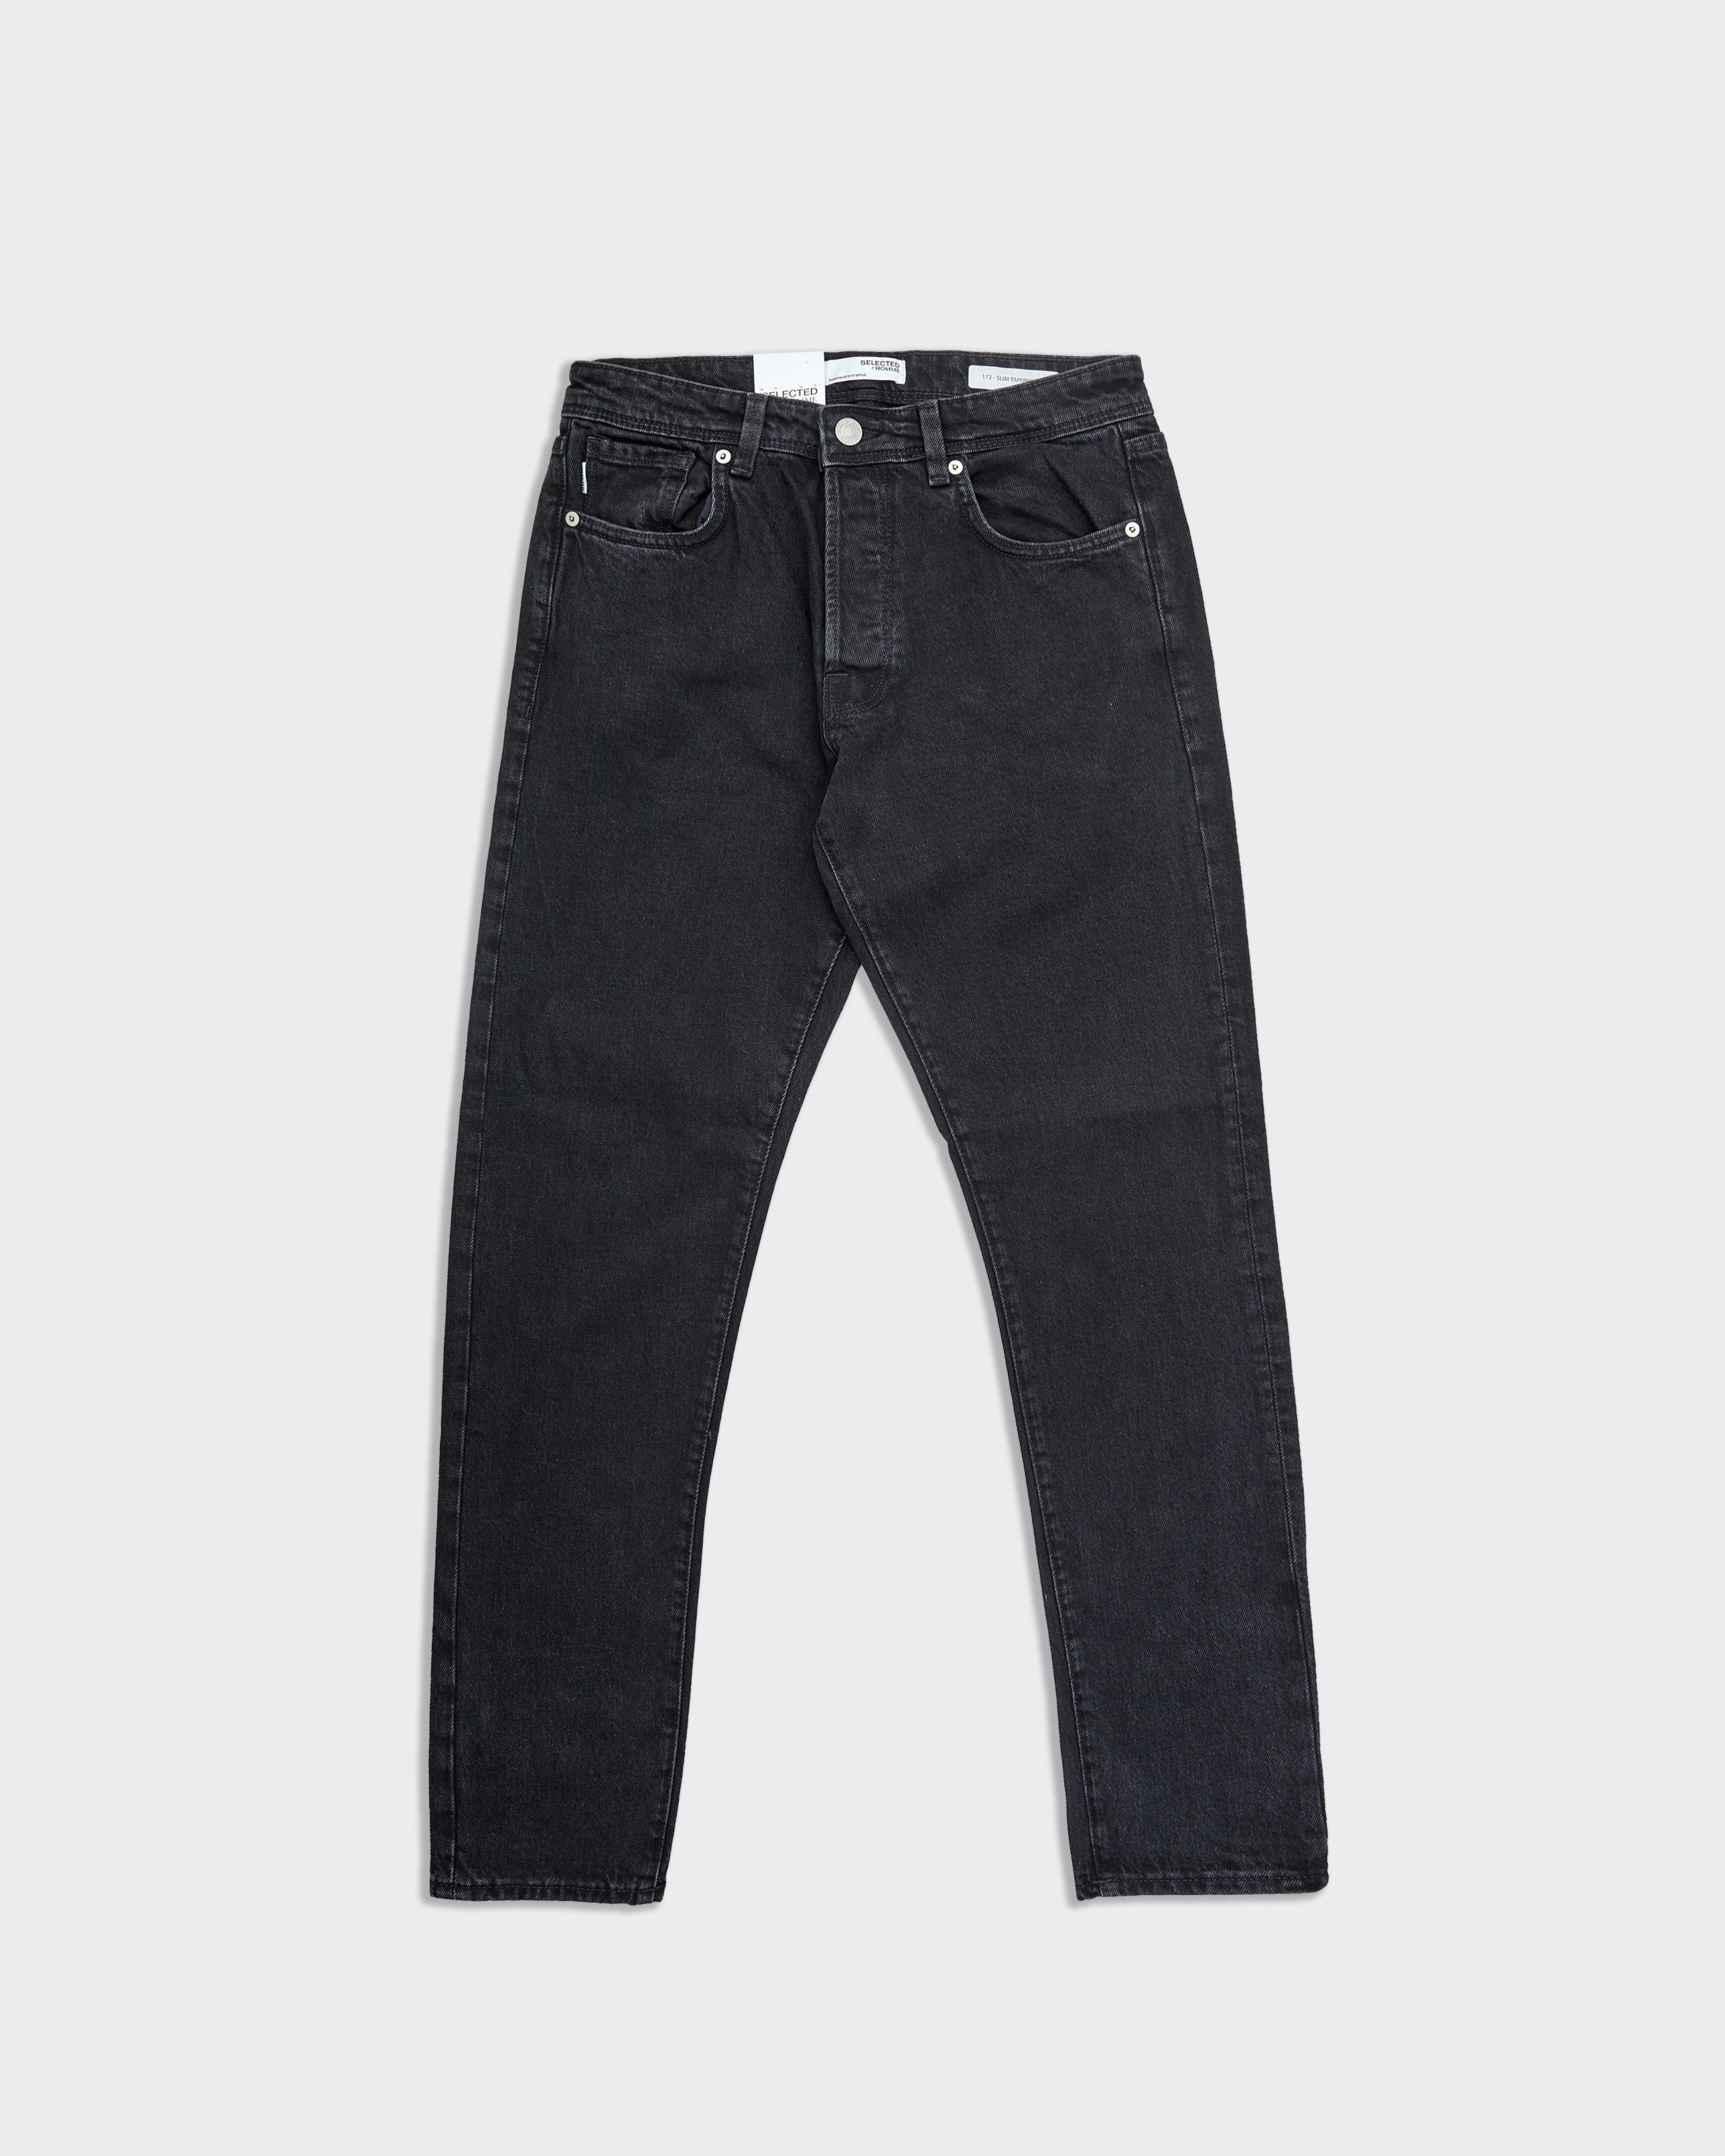 Toby 3072 Jeans Black